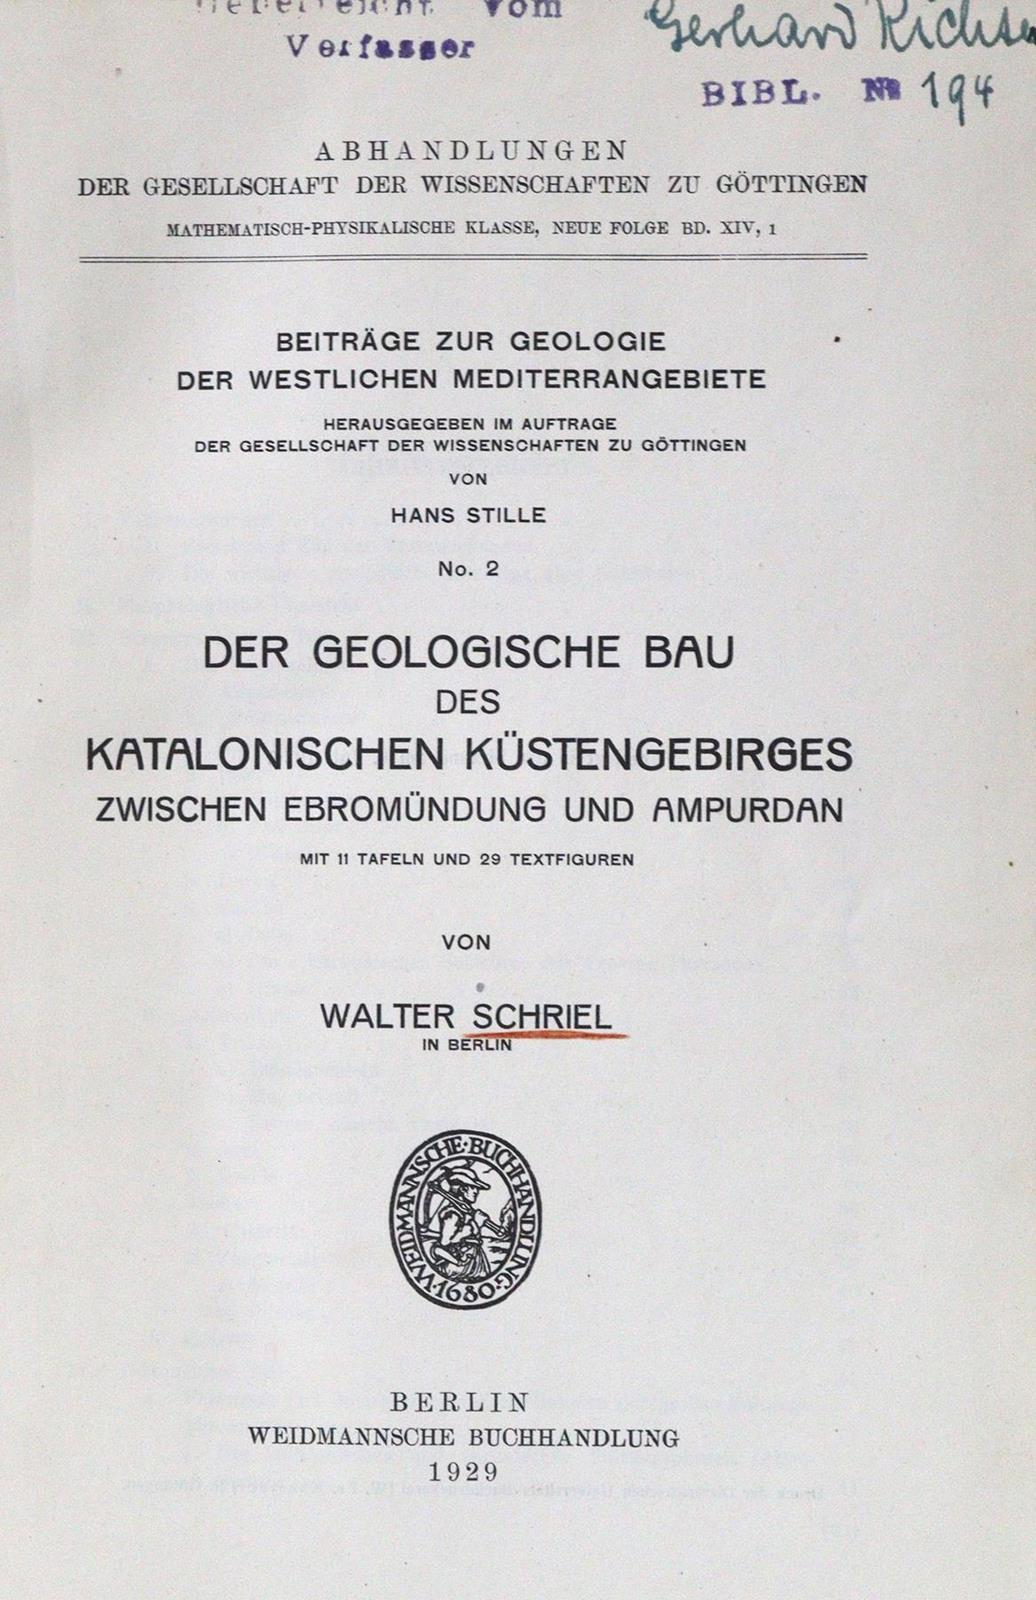 Bulletin de la Societe Mycologique | Bild Nr.3